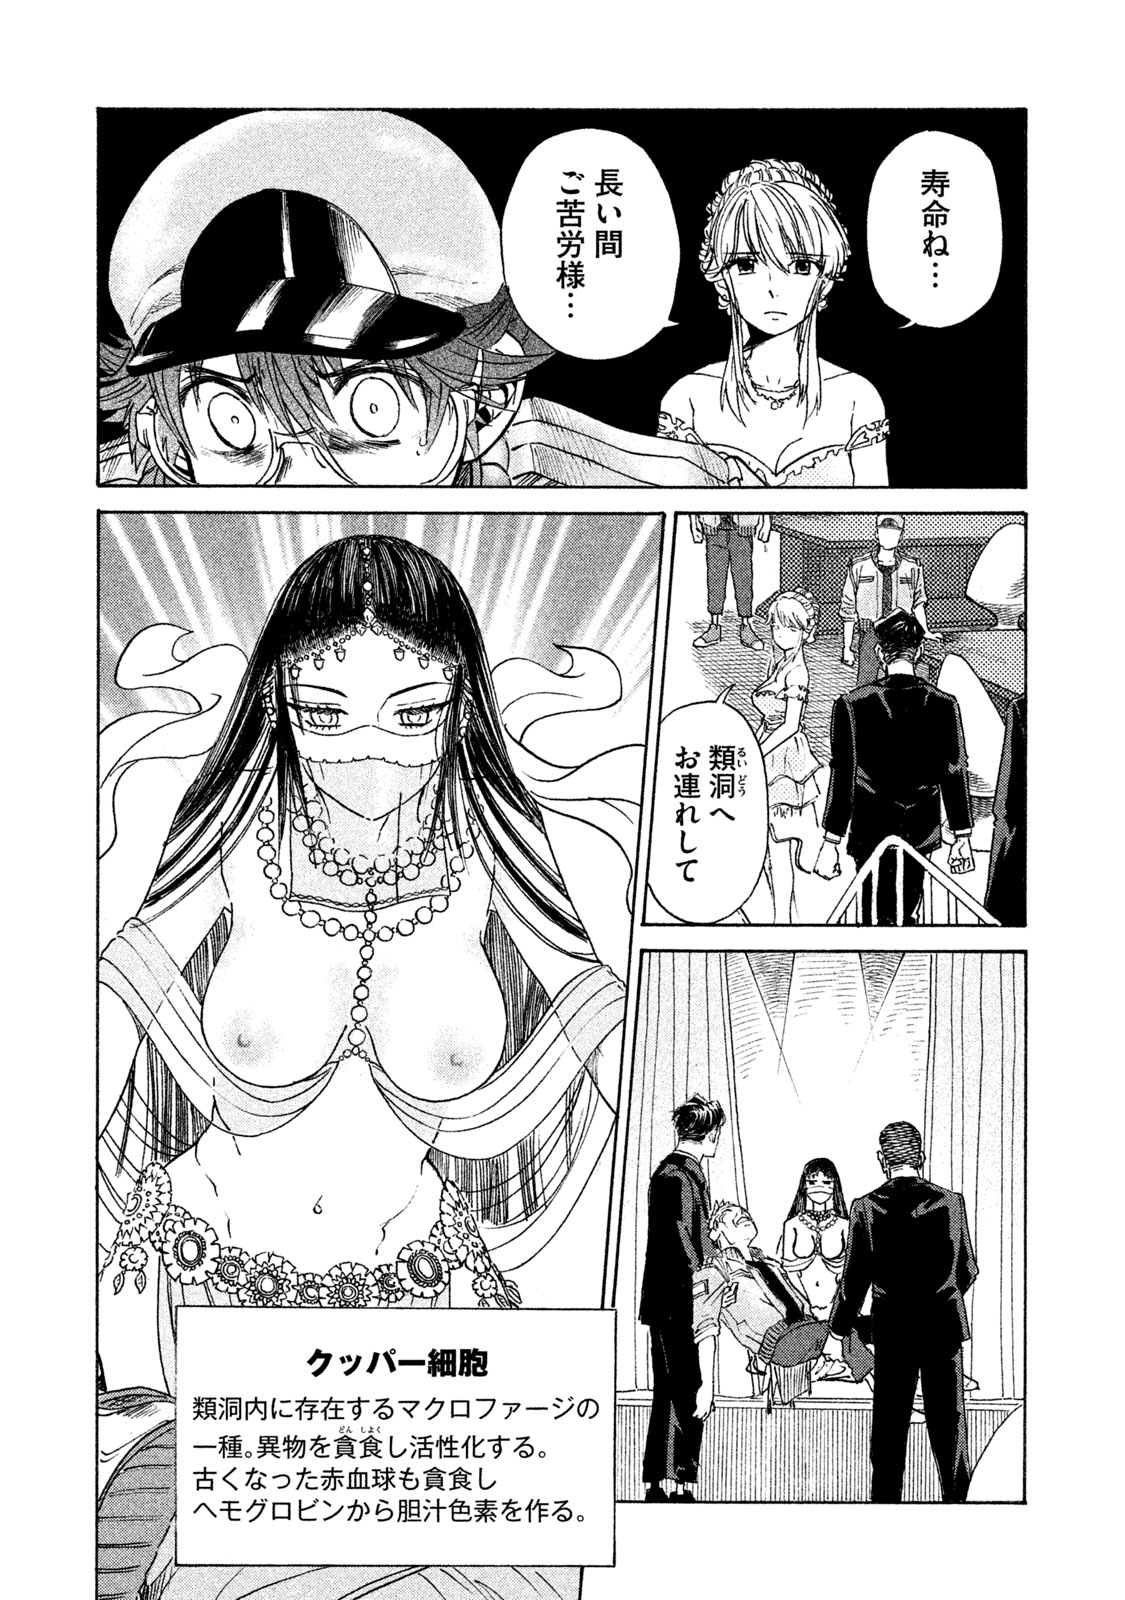 Hataraku Saibou BLACK - Chapter 2 - Page 23